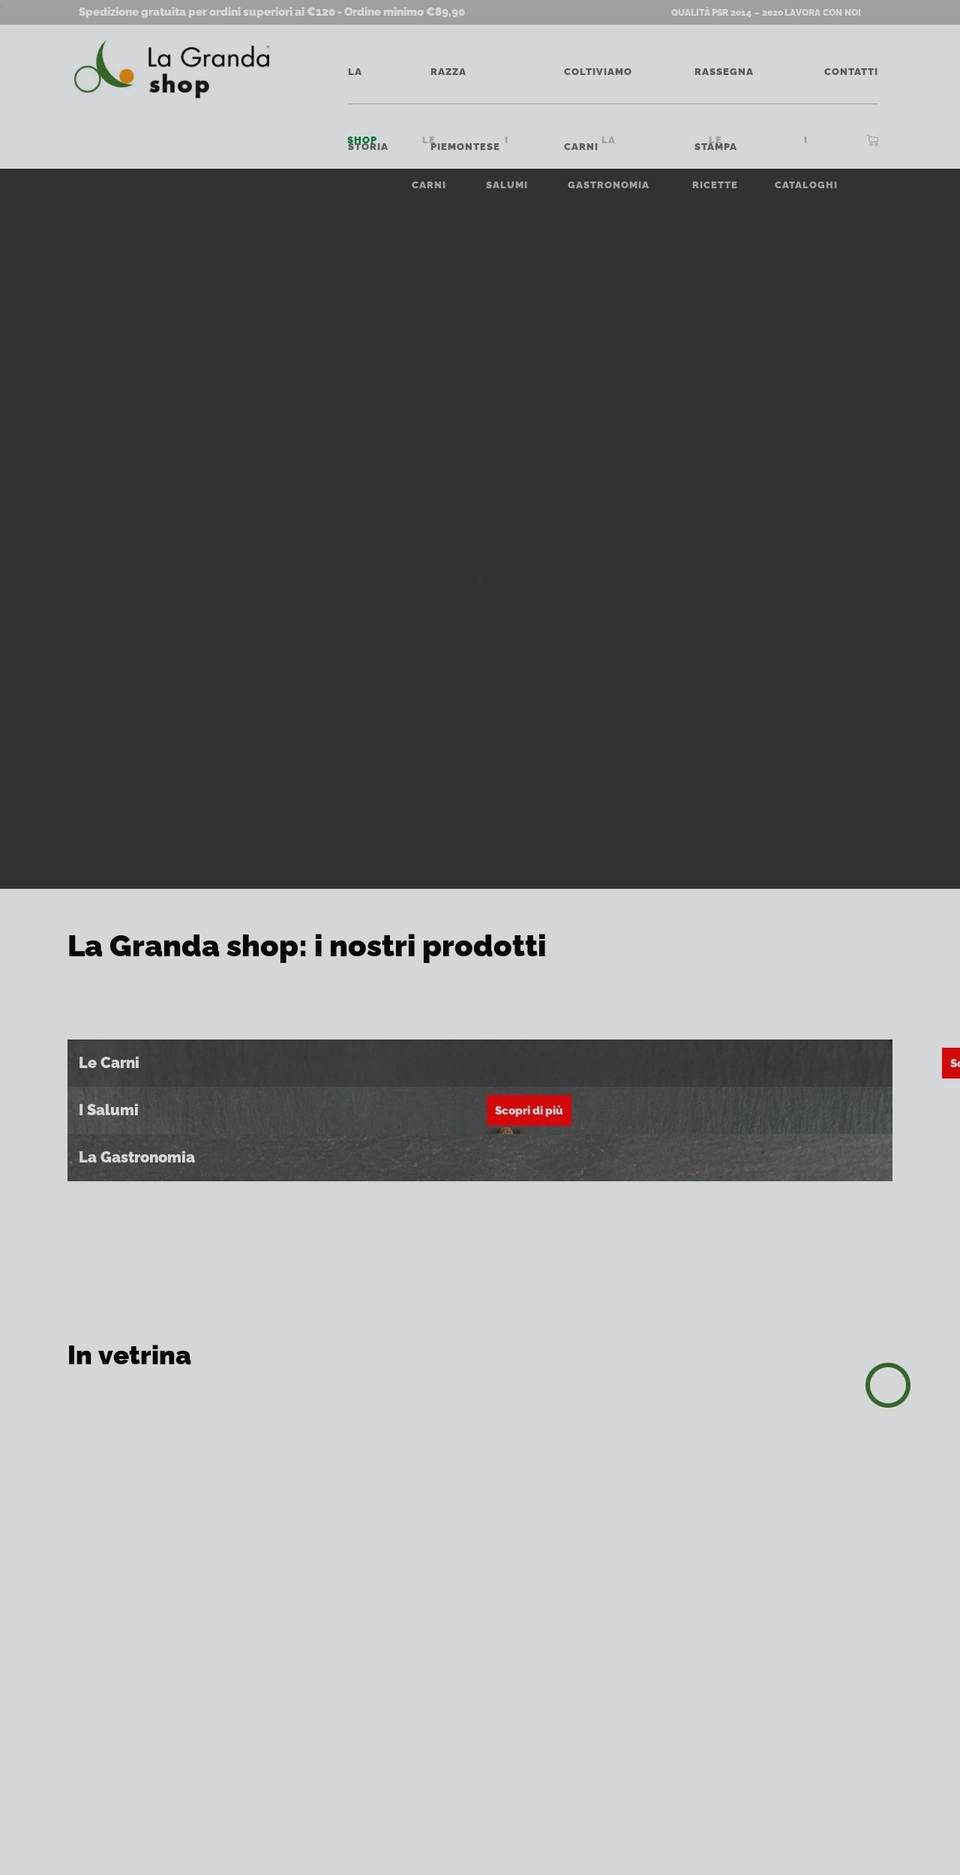 lagrandashop.it shopify website screenshot